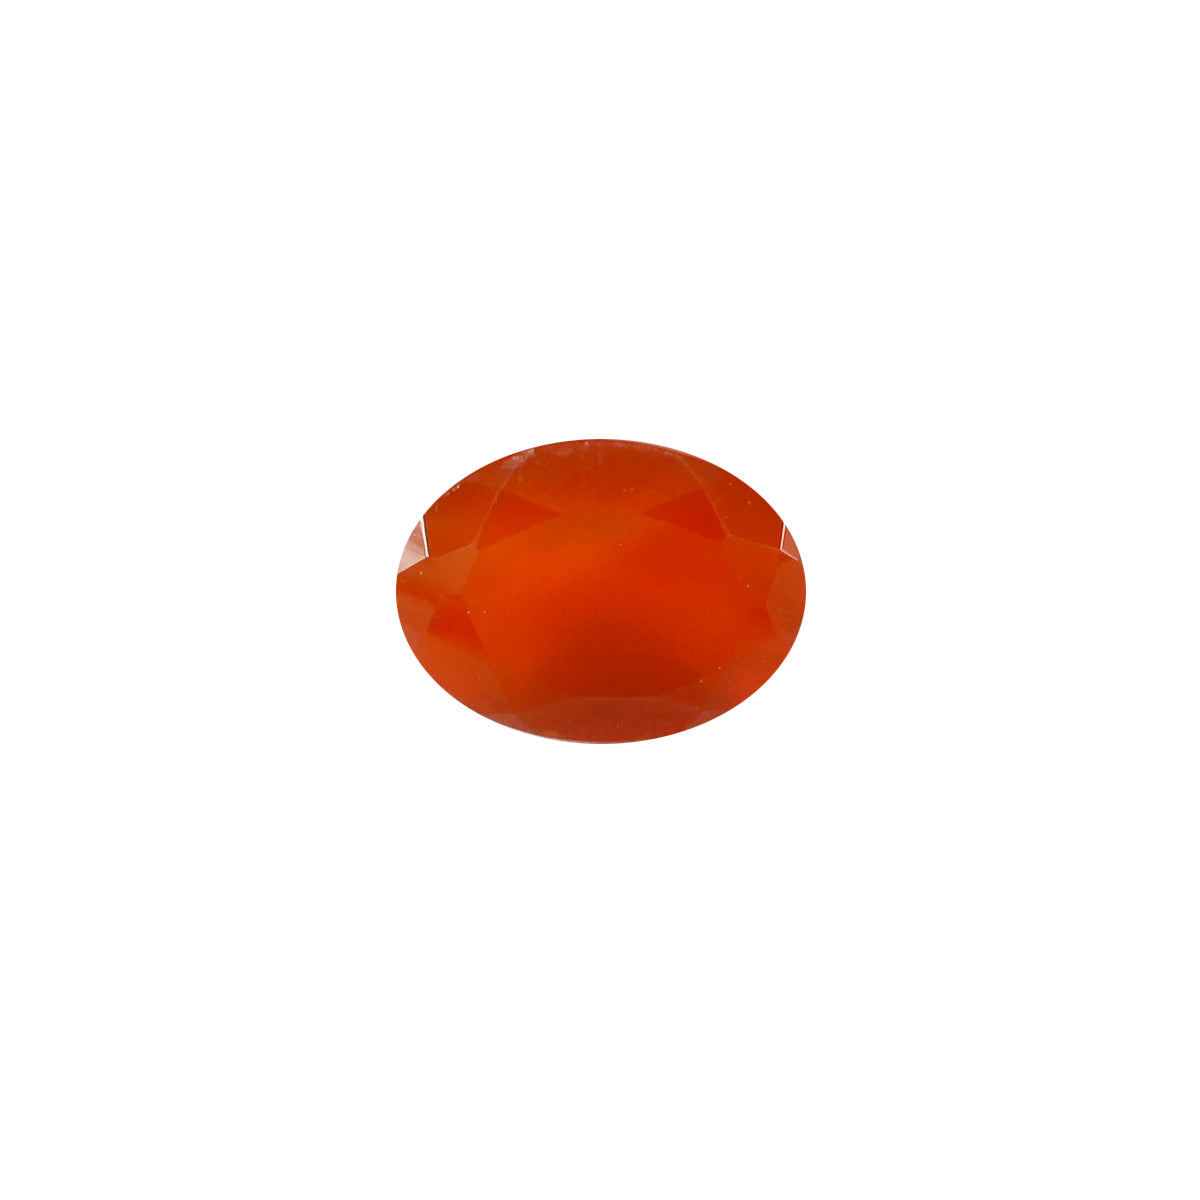 Riyogems 1PC Real Red Onyx Faceted 10x14 mm Oval Shape fantastic Quality Gemstone